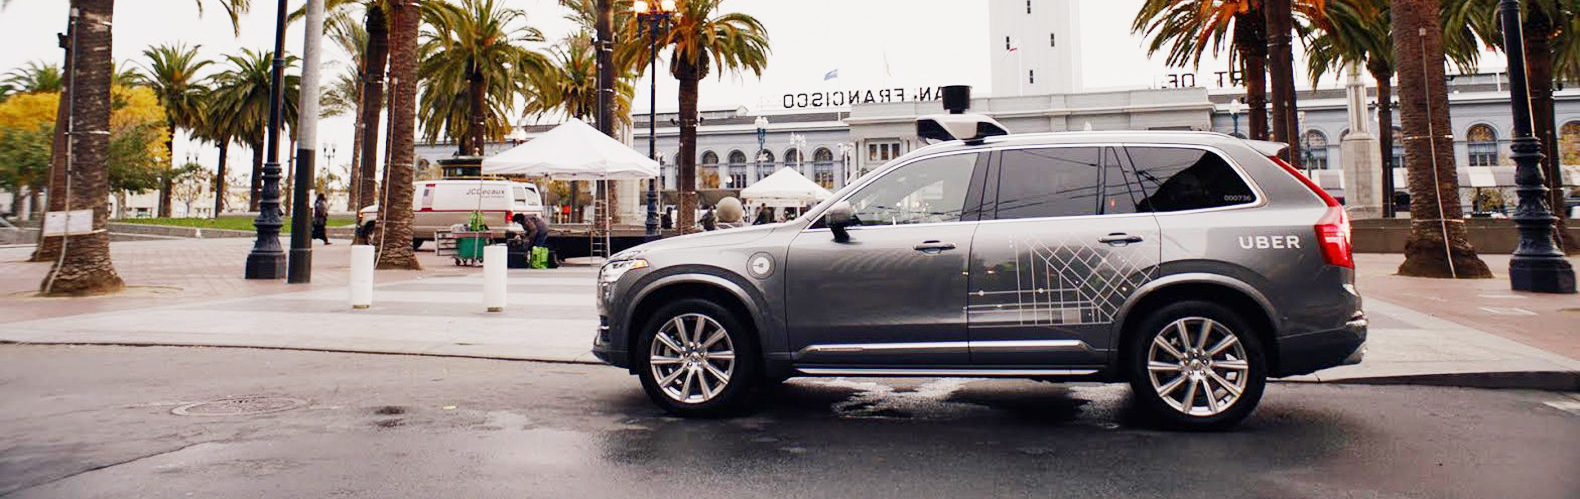 Uber-self-driving-cars-in-San-Francisco-2-1-1580x499.jpg